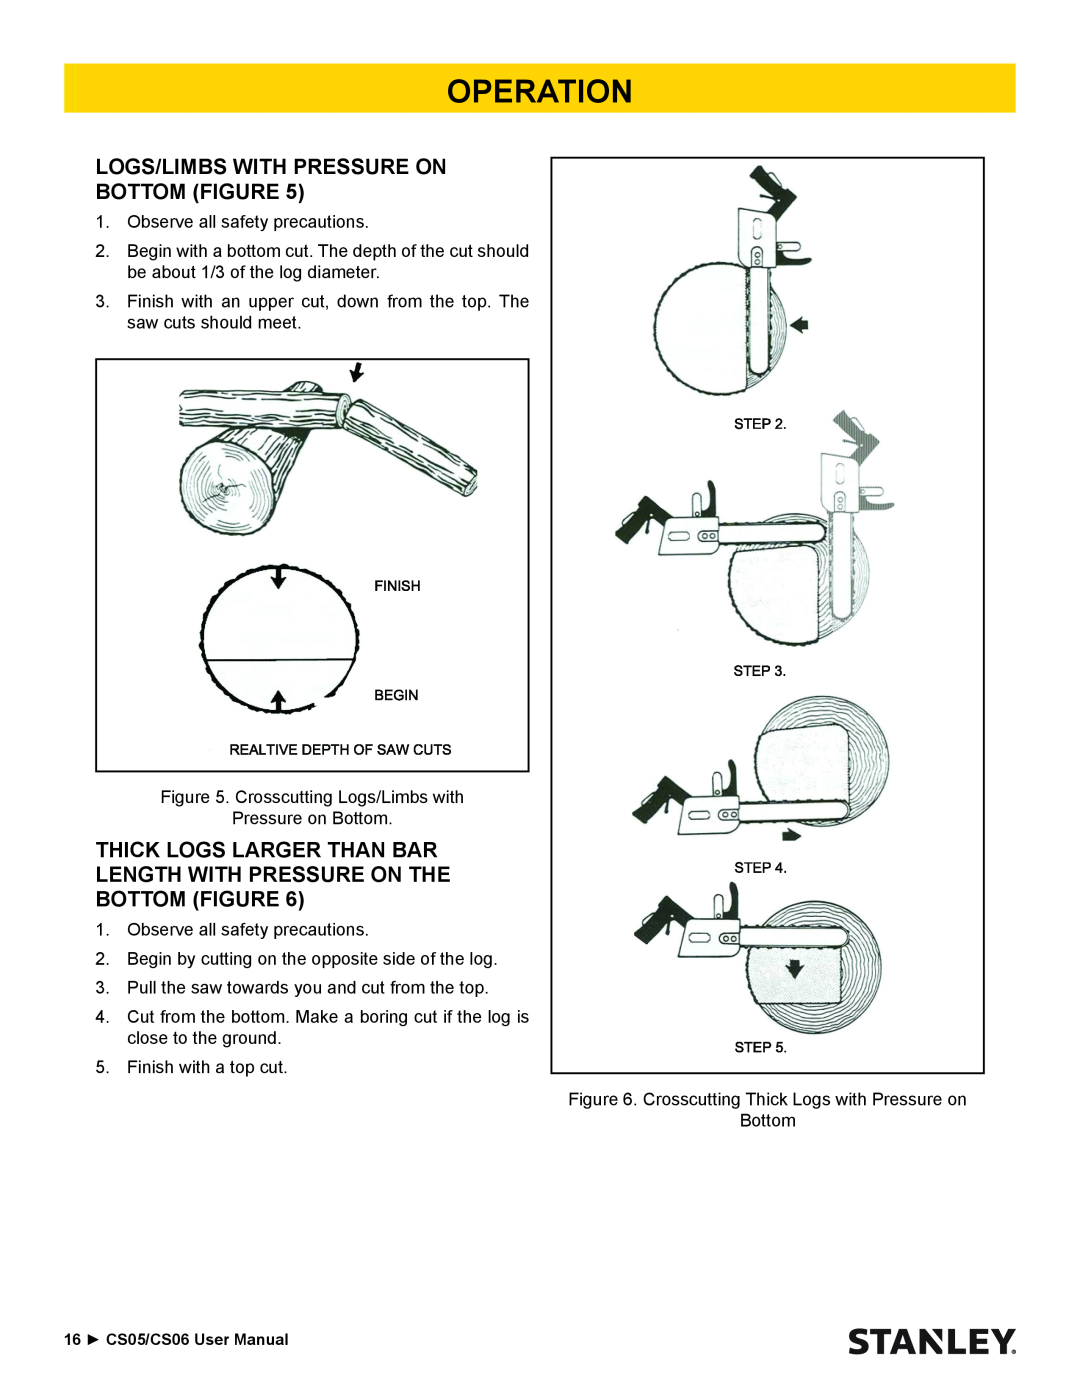 Stanley Black & Decker manual Logs/Limbs With Pressure On Bottom Figure, Operation, 16 CS05/CS06 User Manual 